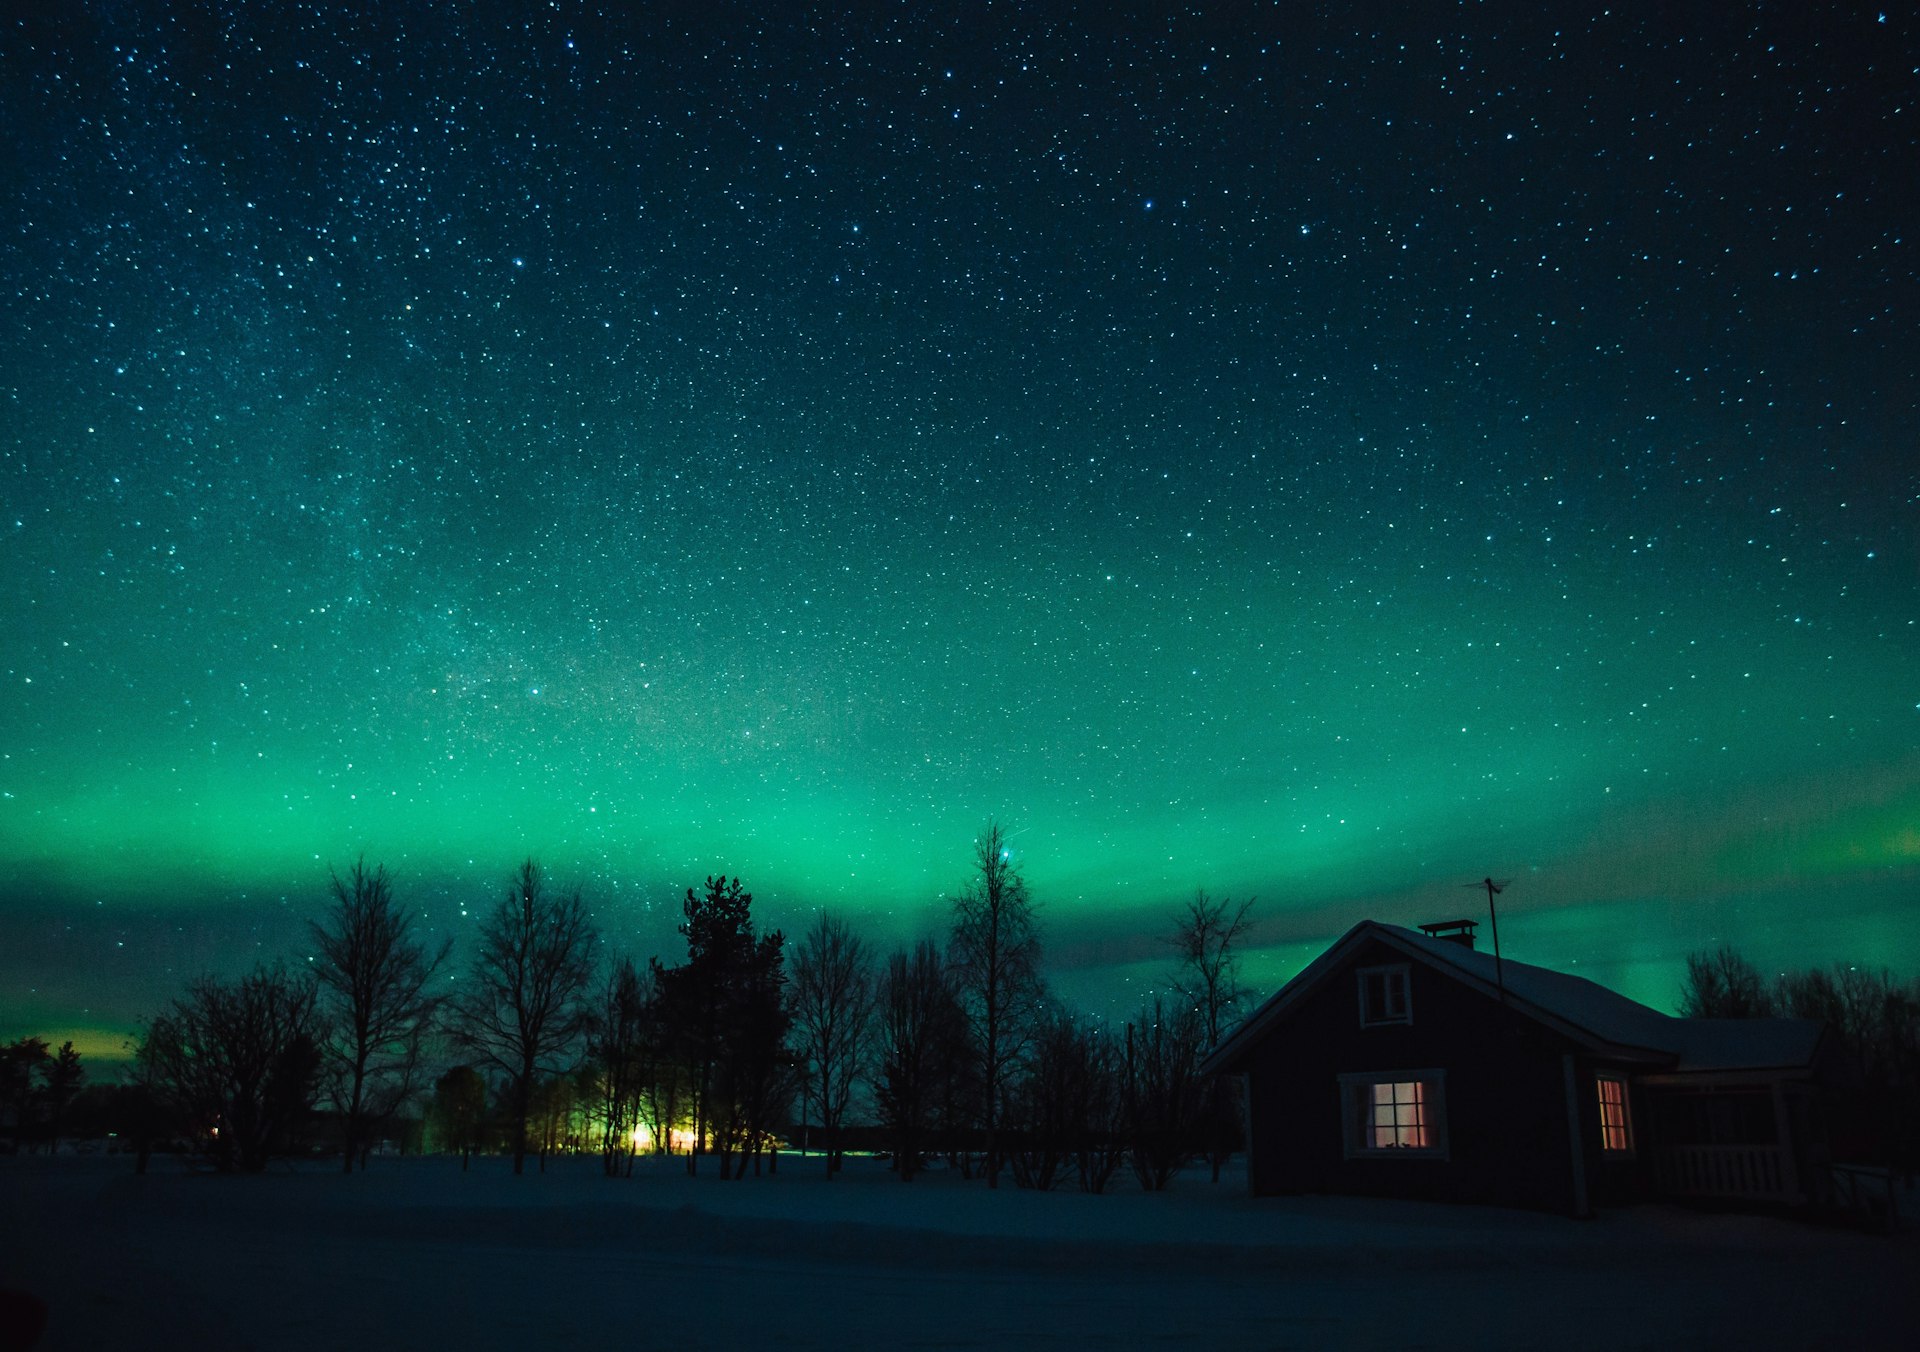 The Northern Lights (Aurora Borealis) over snowed-in cottage in Lapland village. Finland